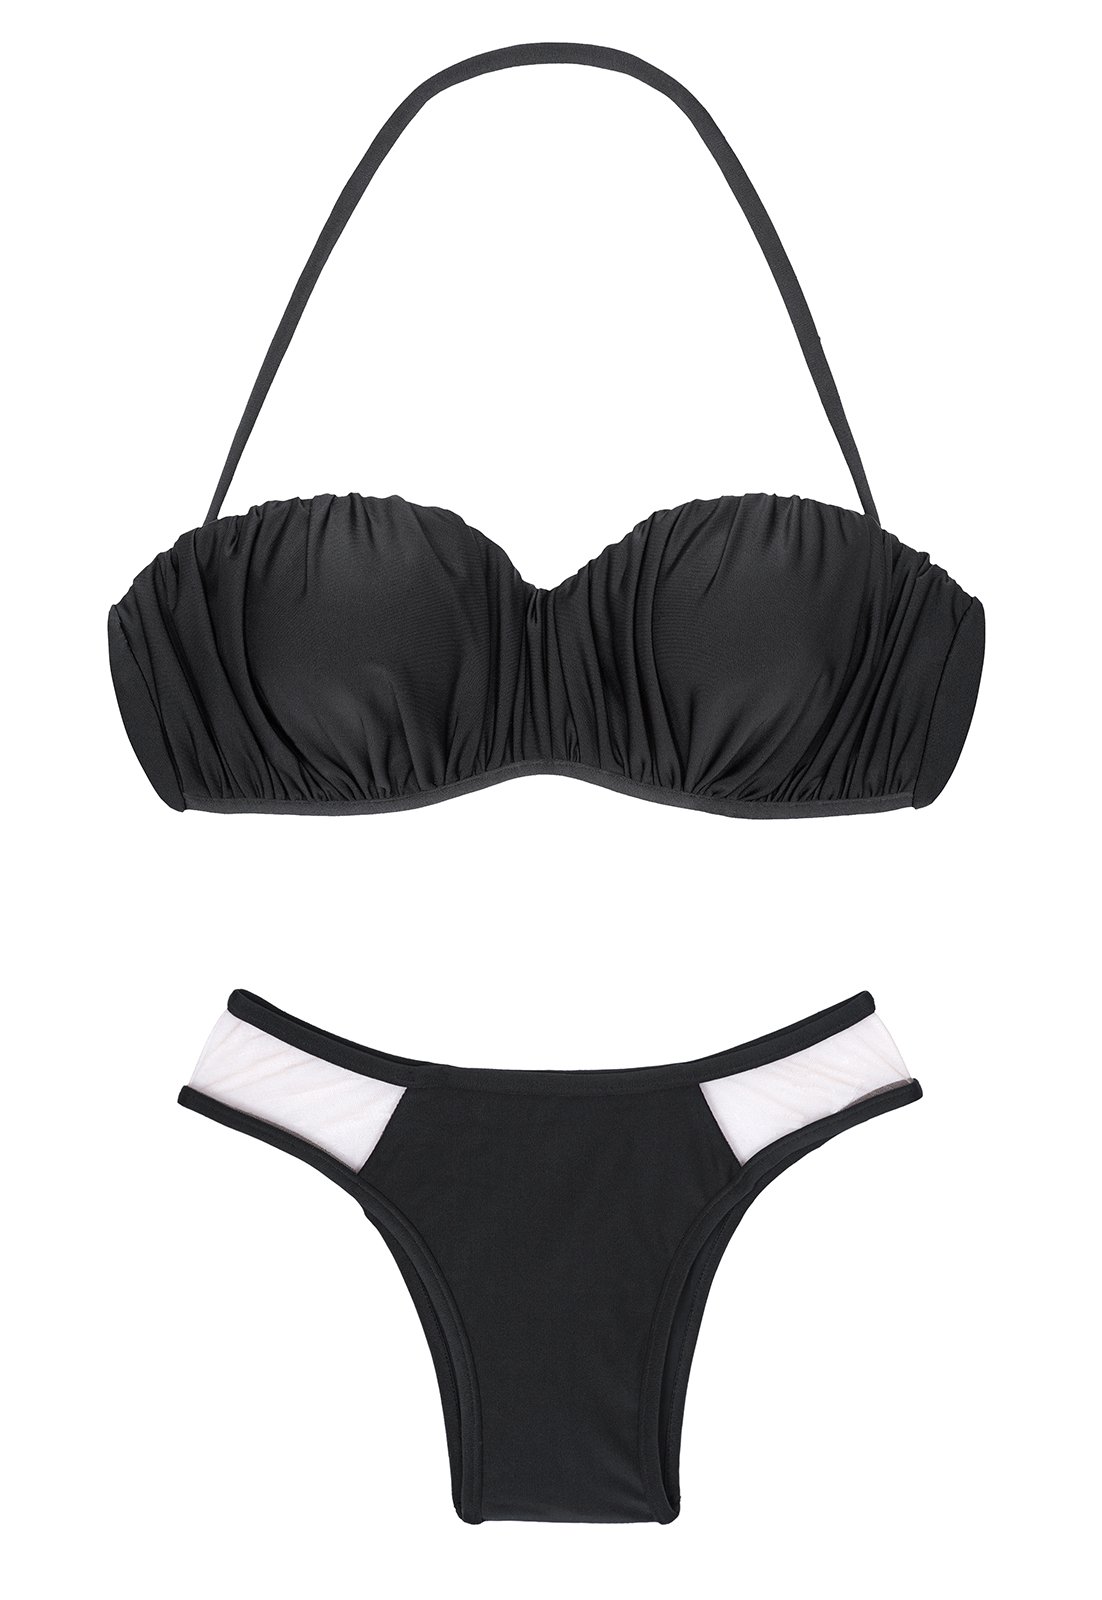 Black Bandeau Bikini, Low-cut Bottom, Bi-material - Poko Tule Preto